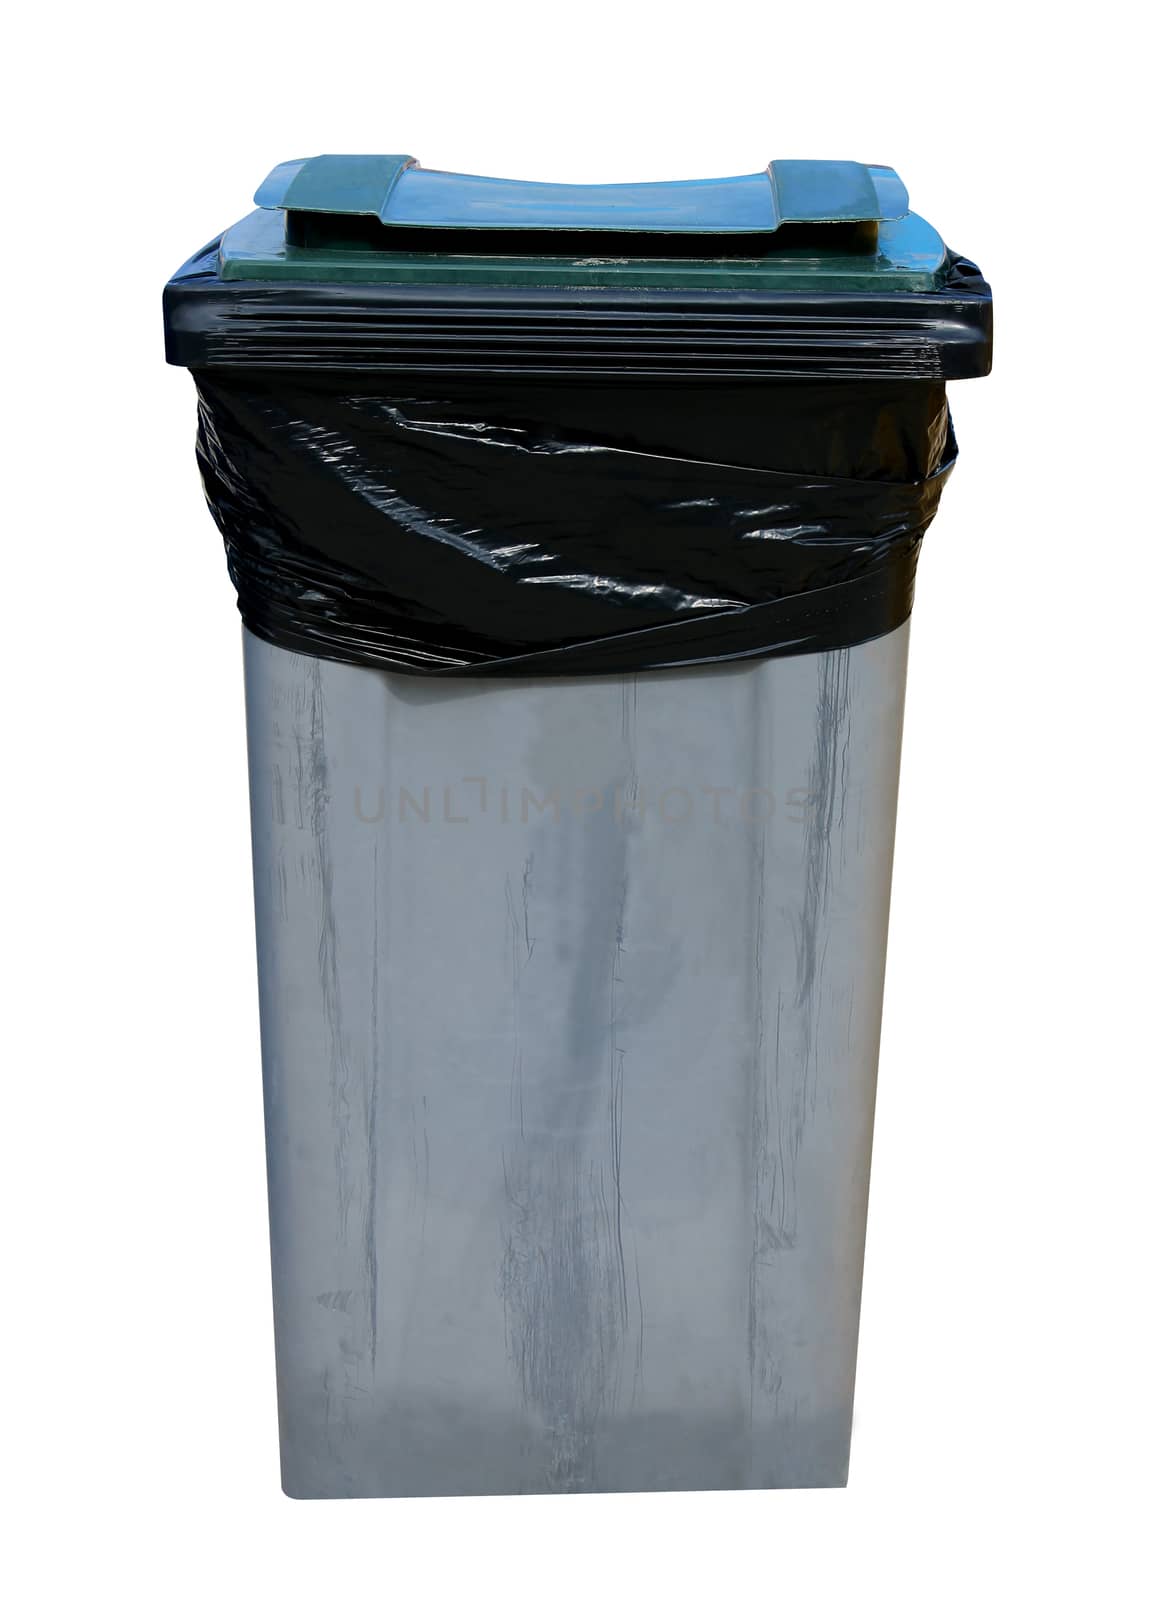 Gray recycling bin by speedfighter